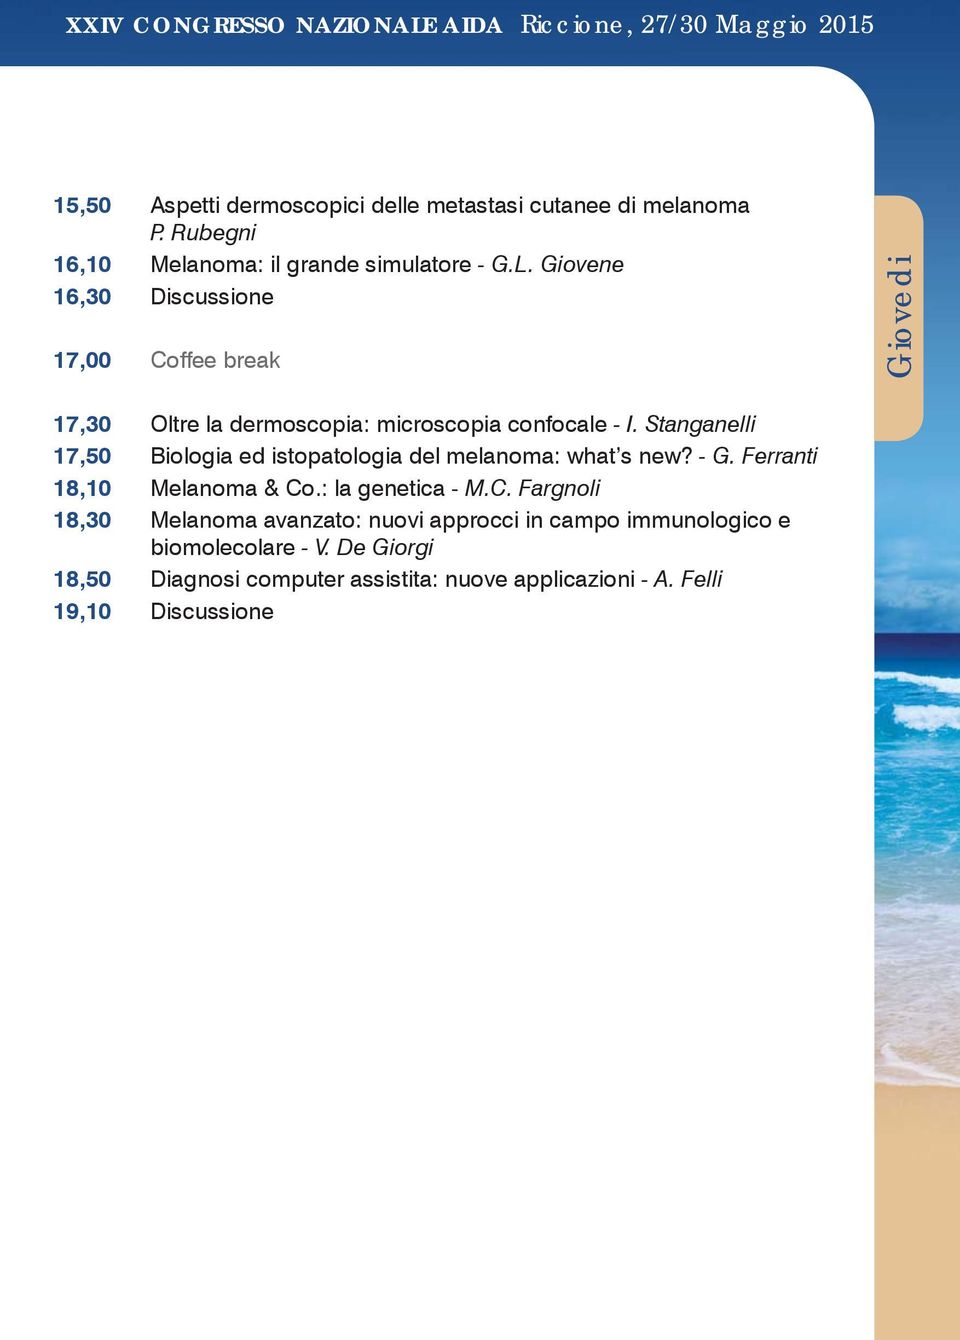 Stanganelli 17,50 Biologia ed istopatologia del melanoma: what s new? - G. Ferranti 18,10 Melanoma & Co